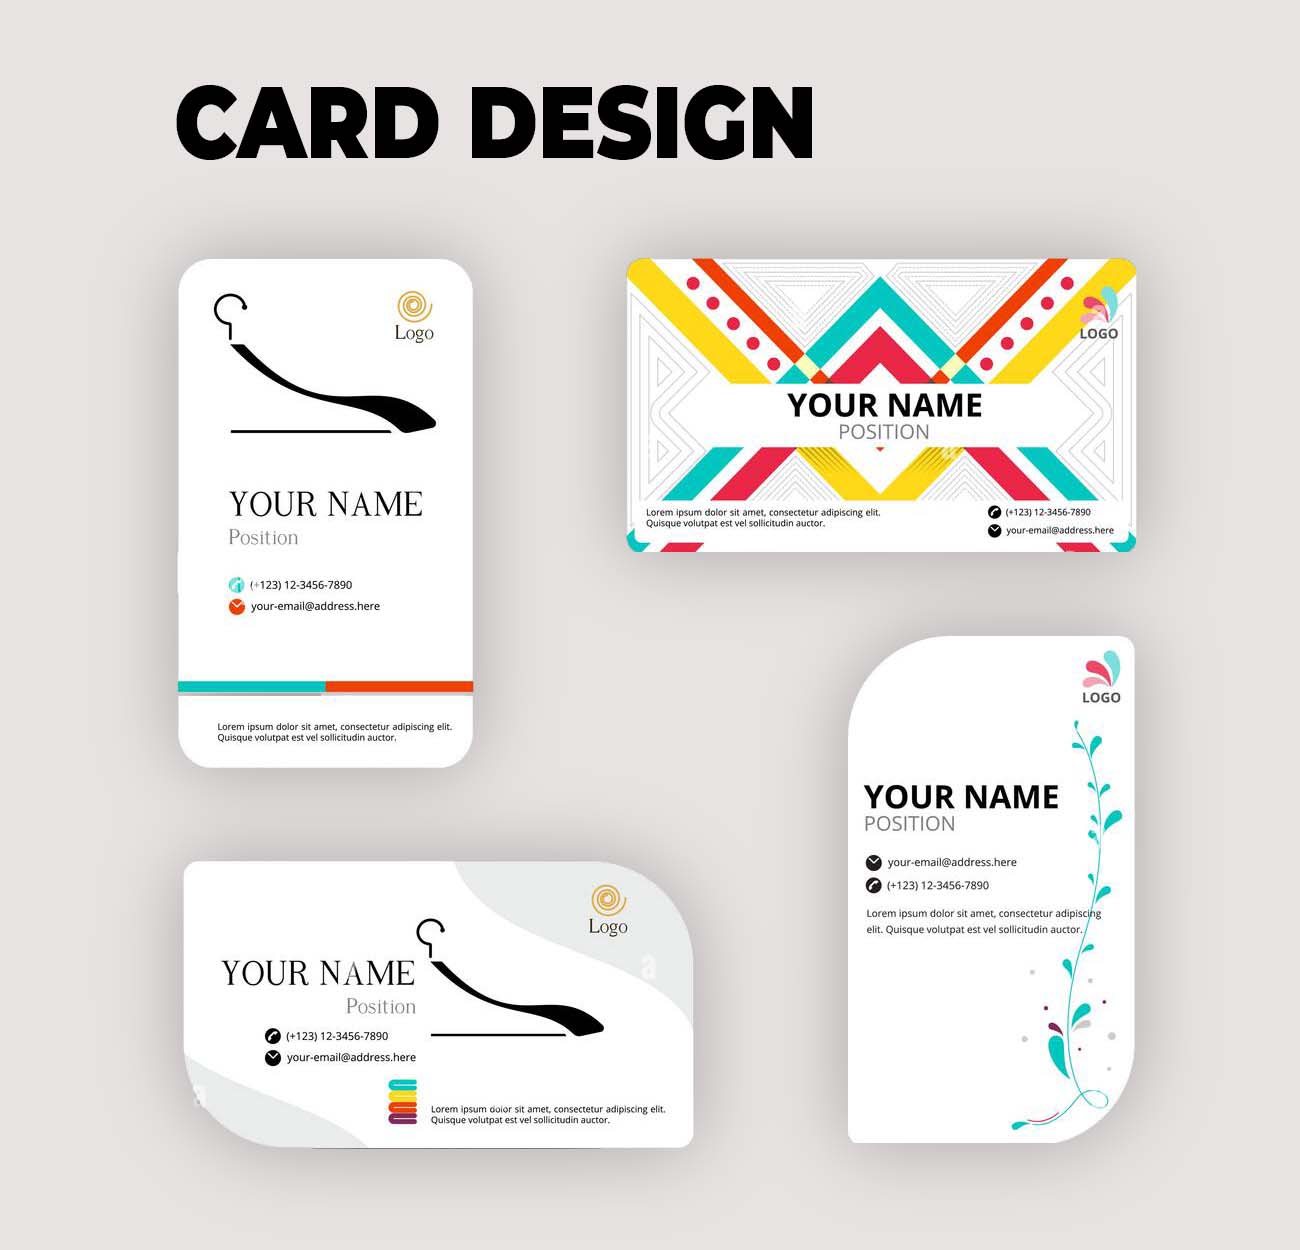 Gudang Branding - Card Design